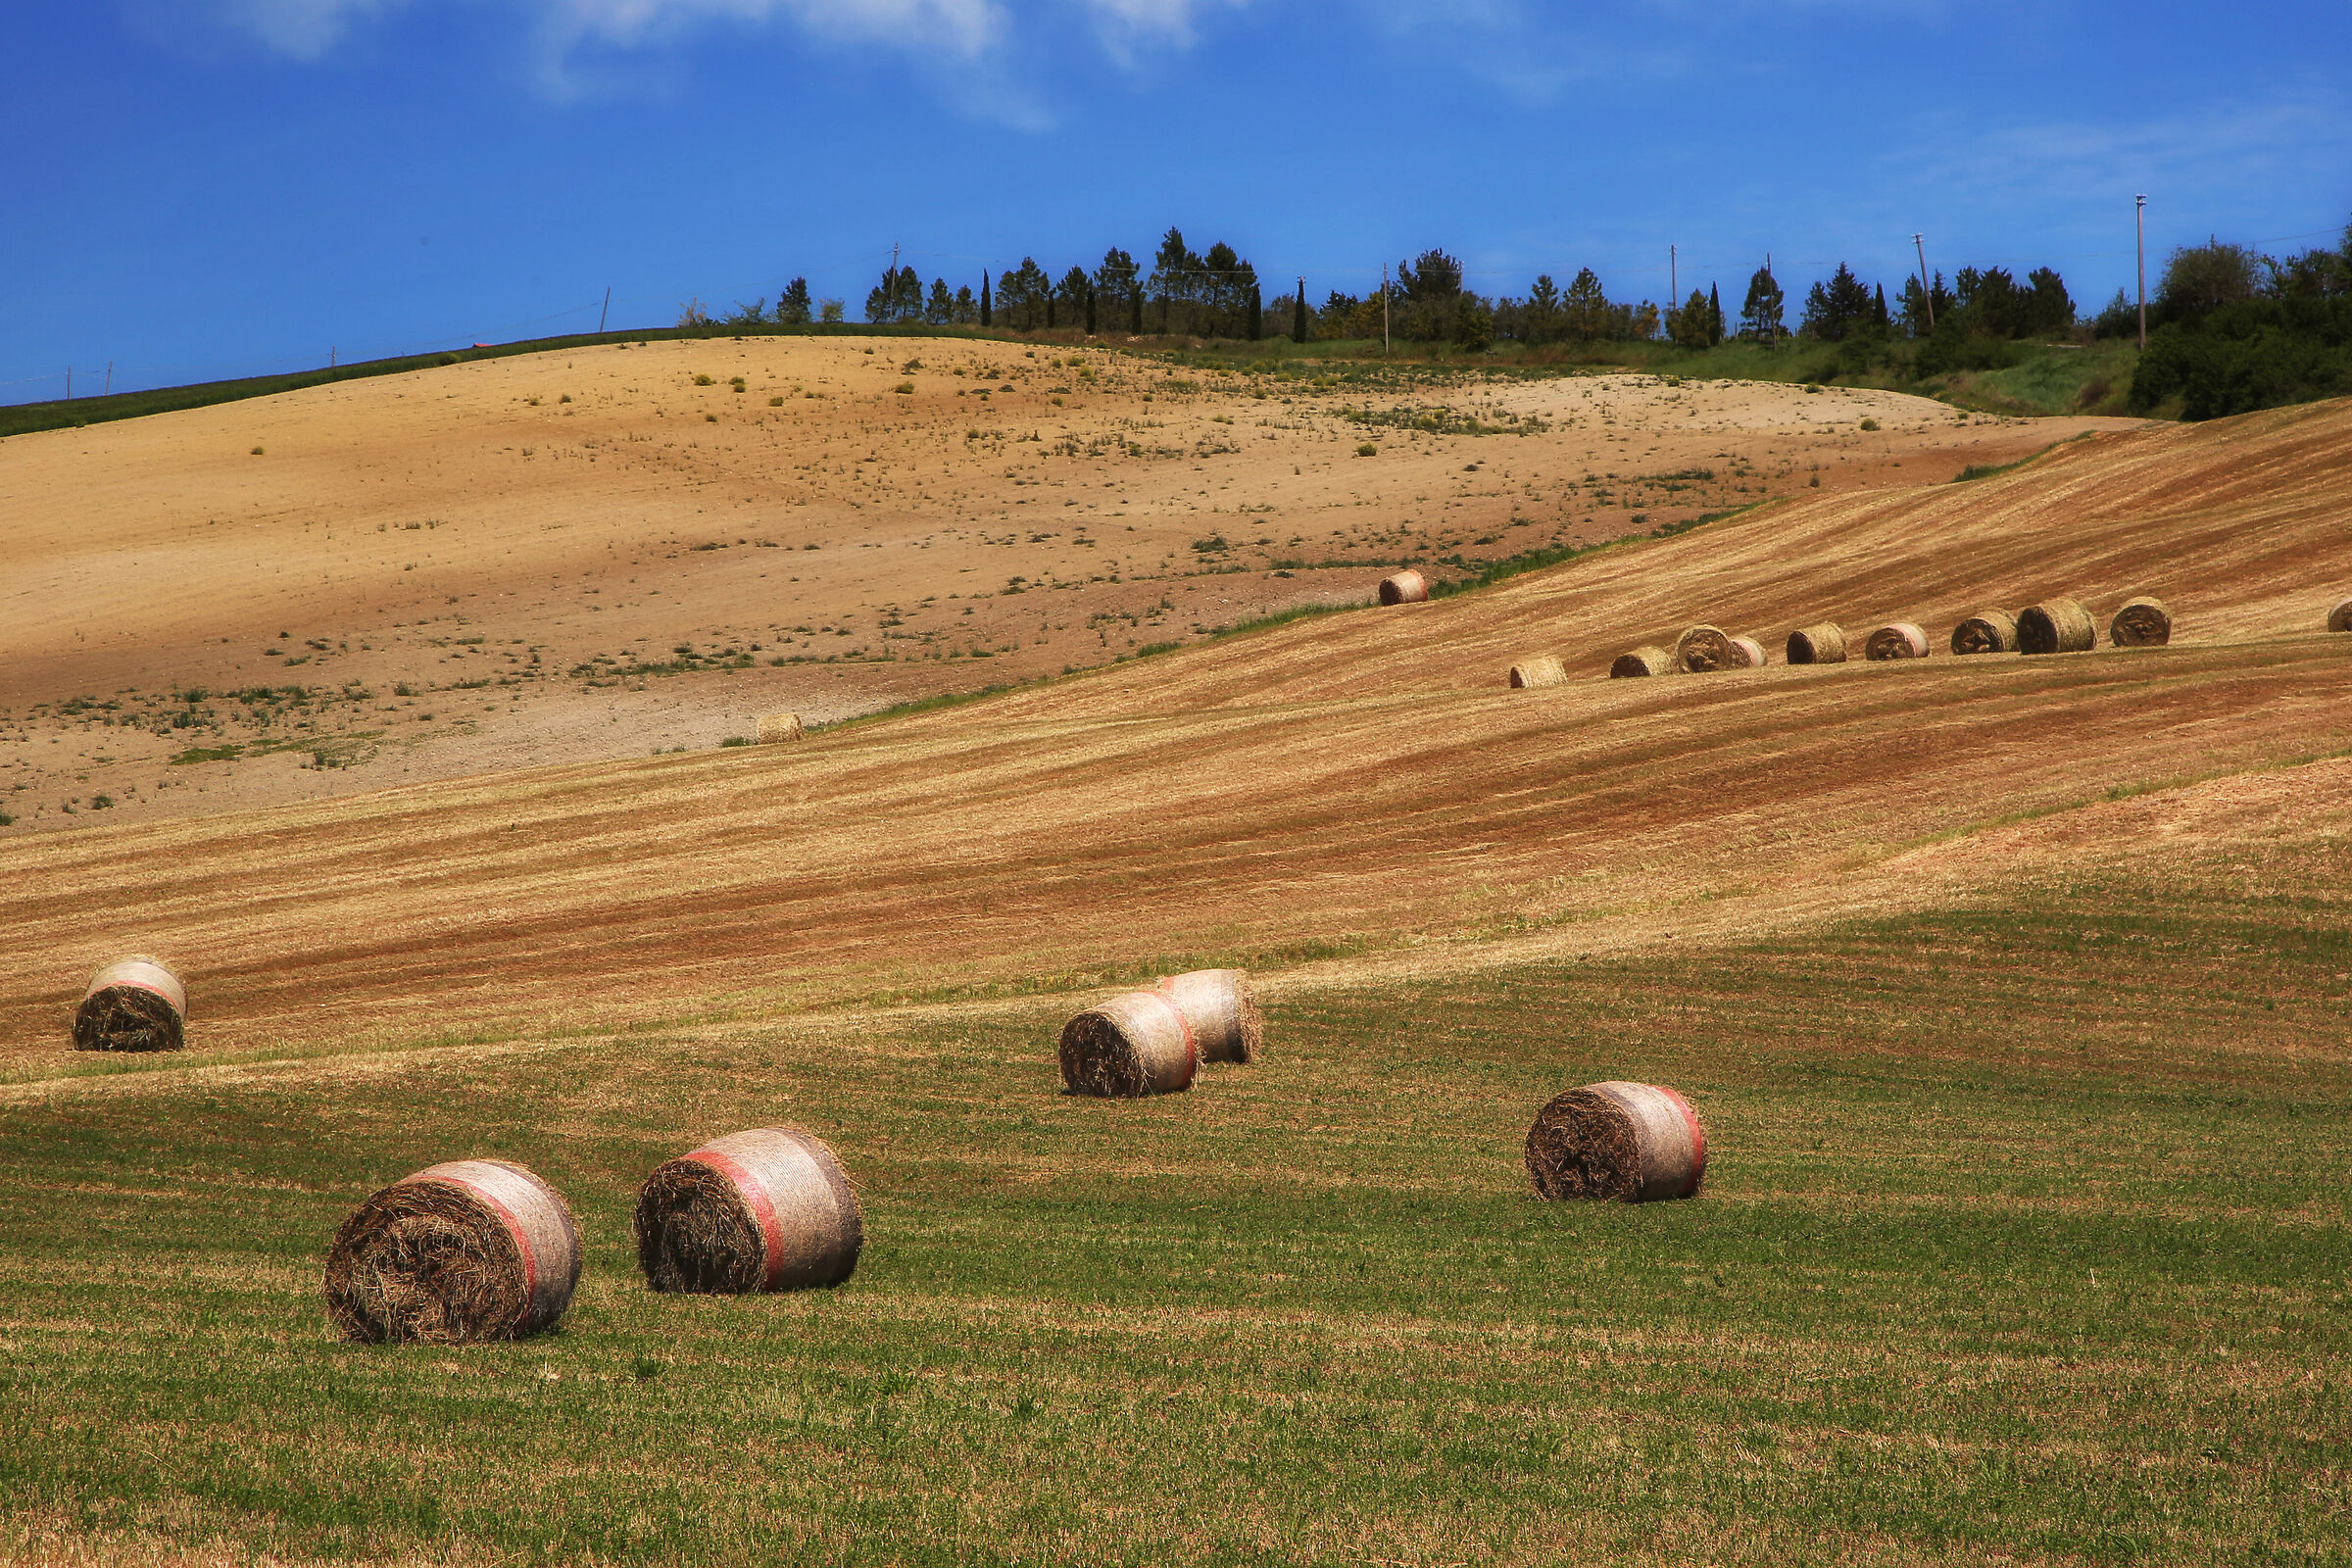 Tuscan countryside...